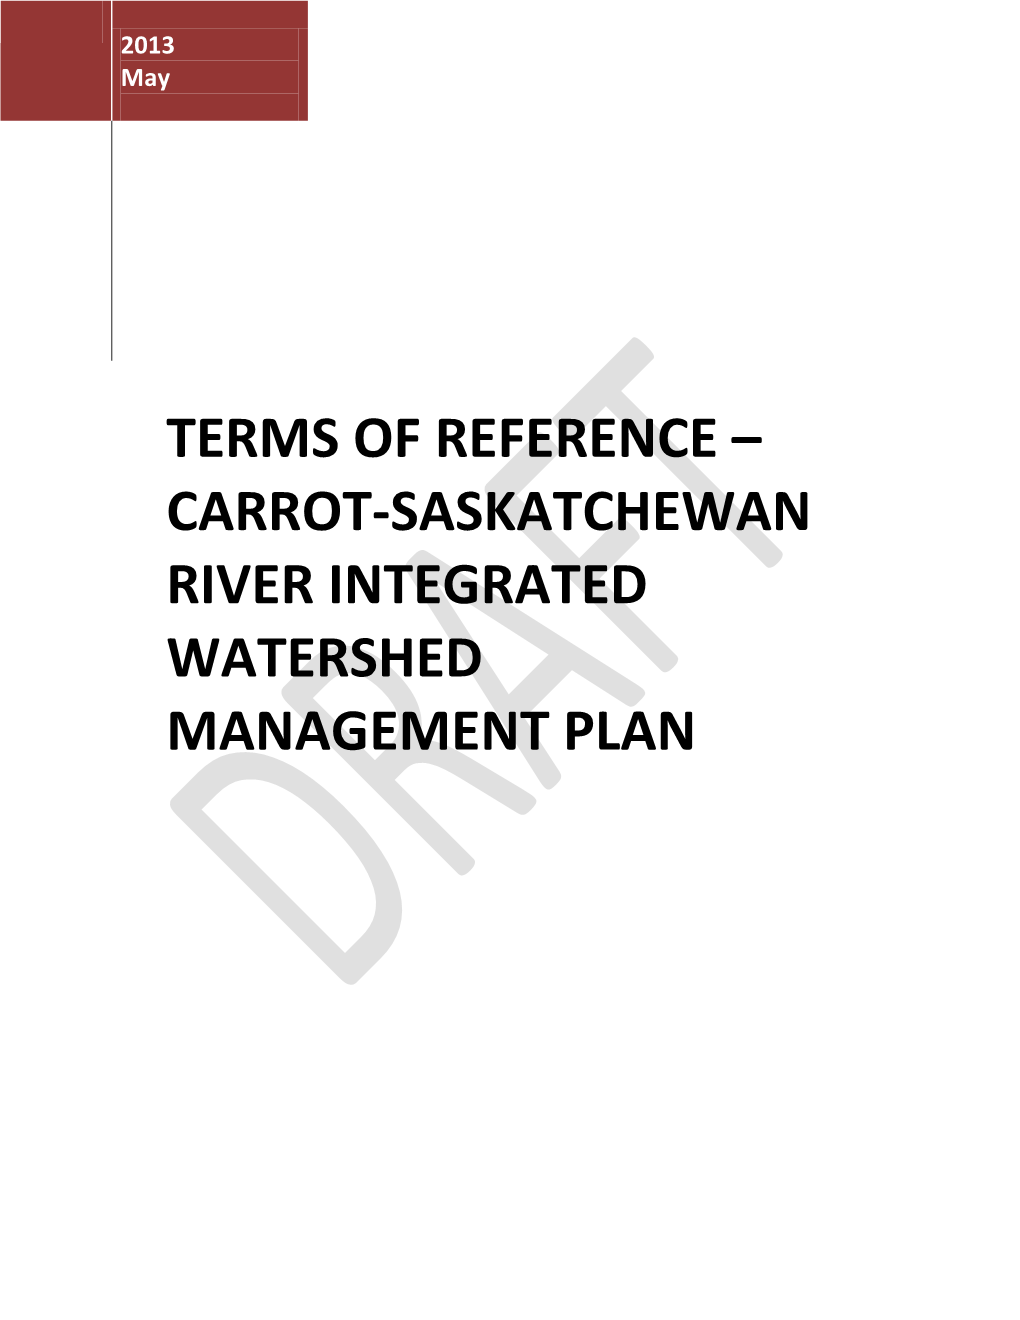 Carrot-Saskatchewan River Integrated Watershed Management Plan